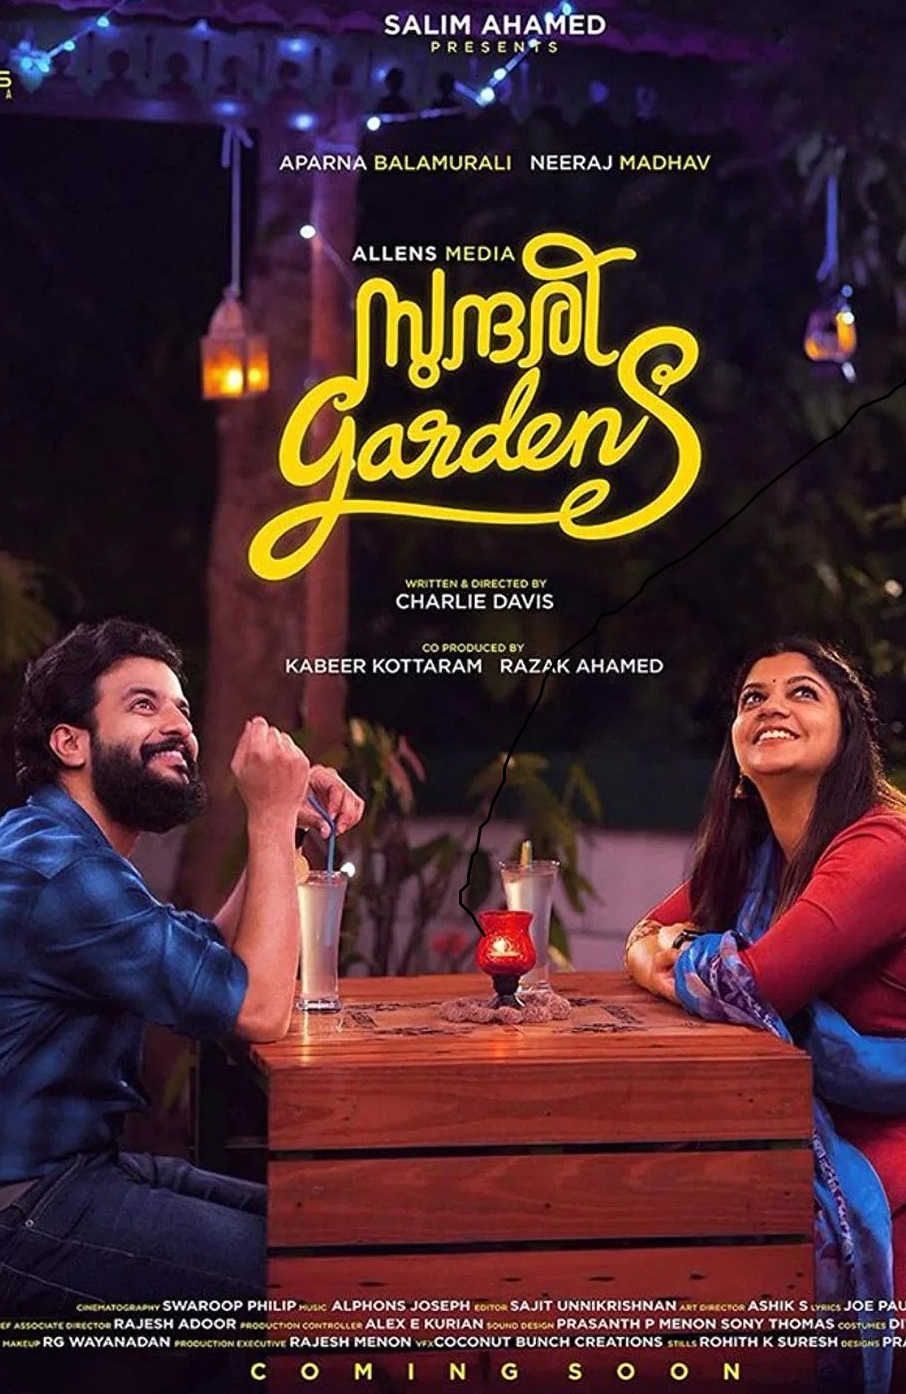 Sundari Gardens 2022 Tamil Dubbed Drama Movie Online